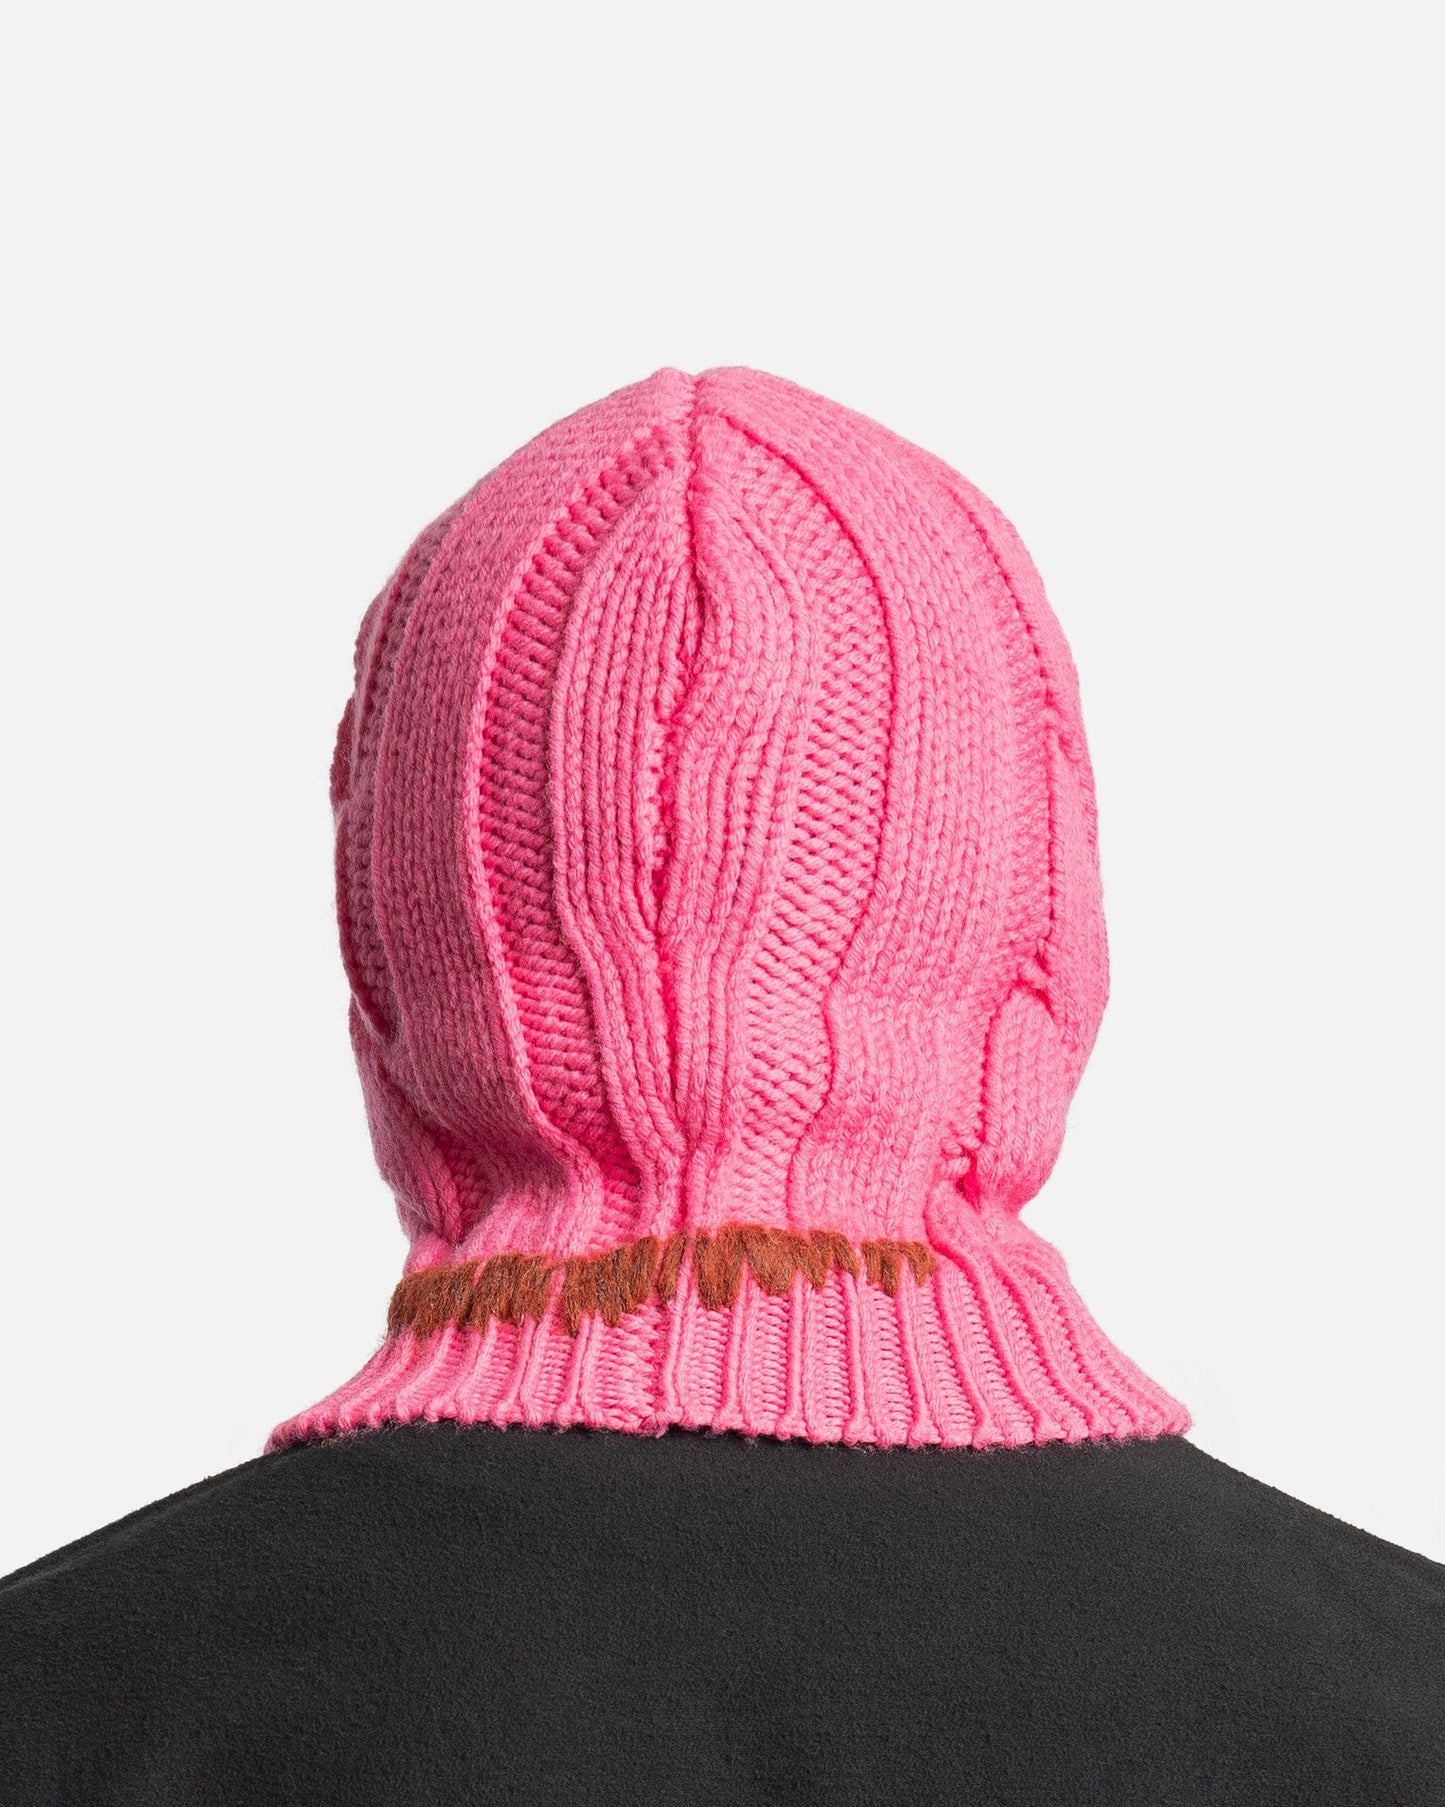 Marni Men's Hats 3D Cable + Mending Wool Balaclava in Fuchsia